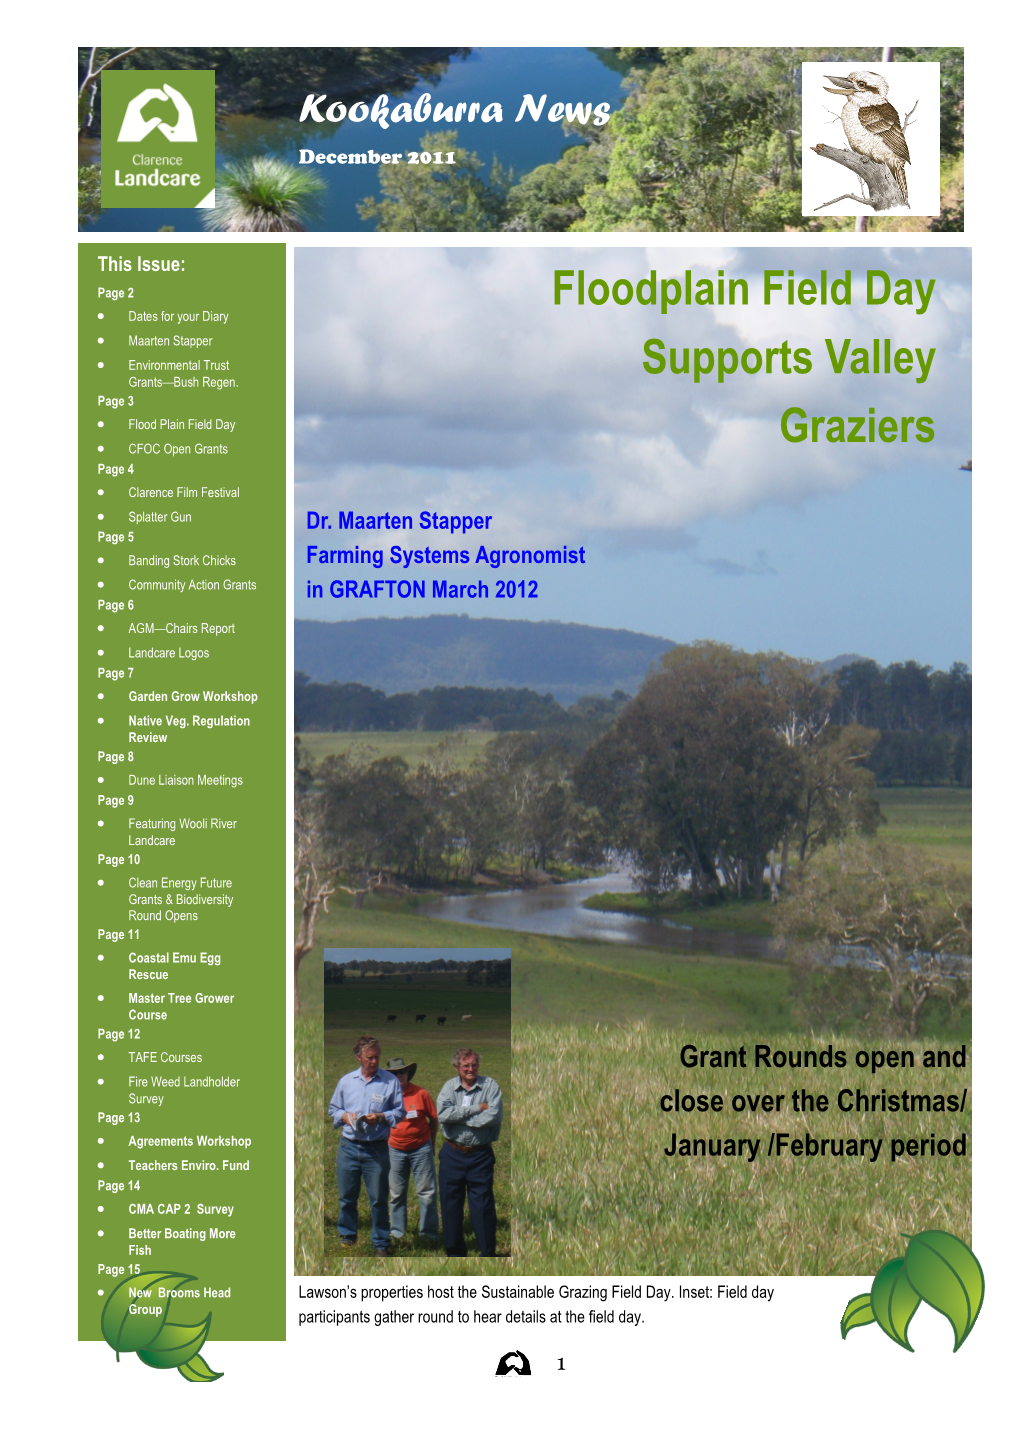 Floodplain Field Day Supports Valley Graziers